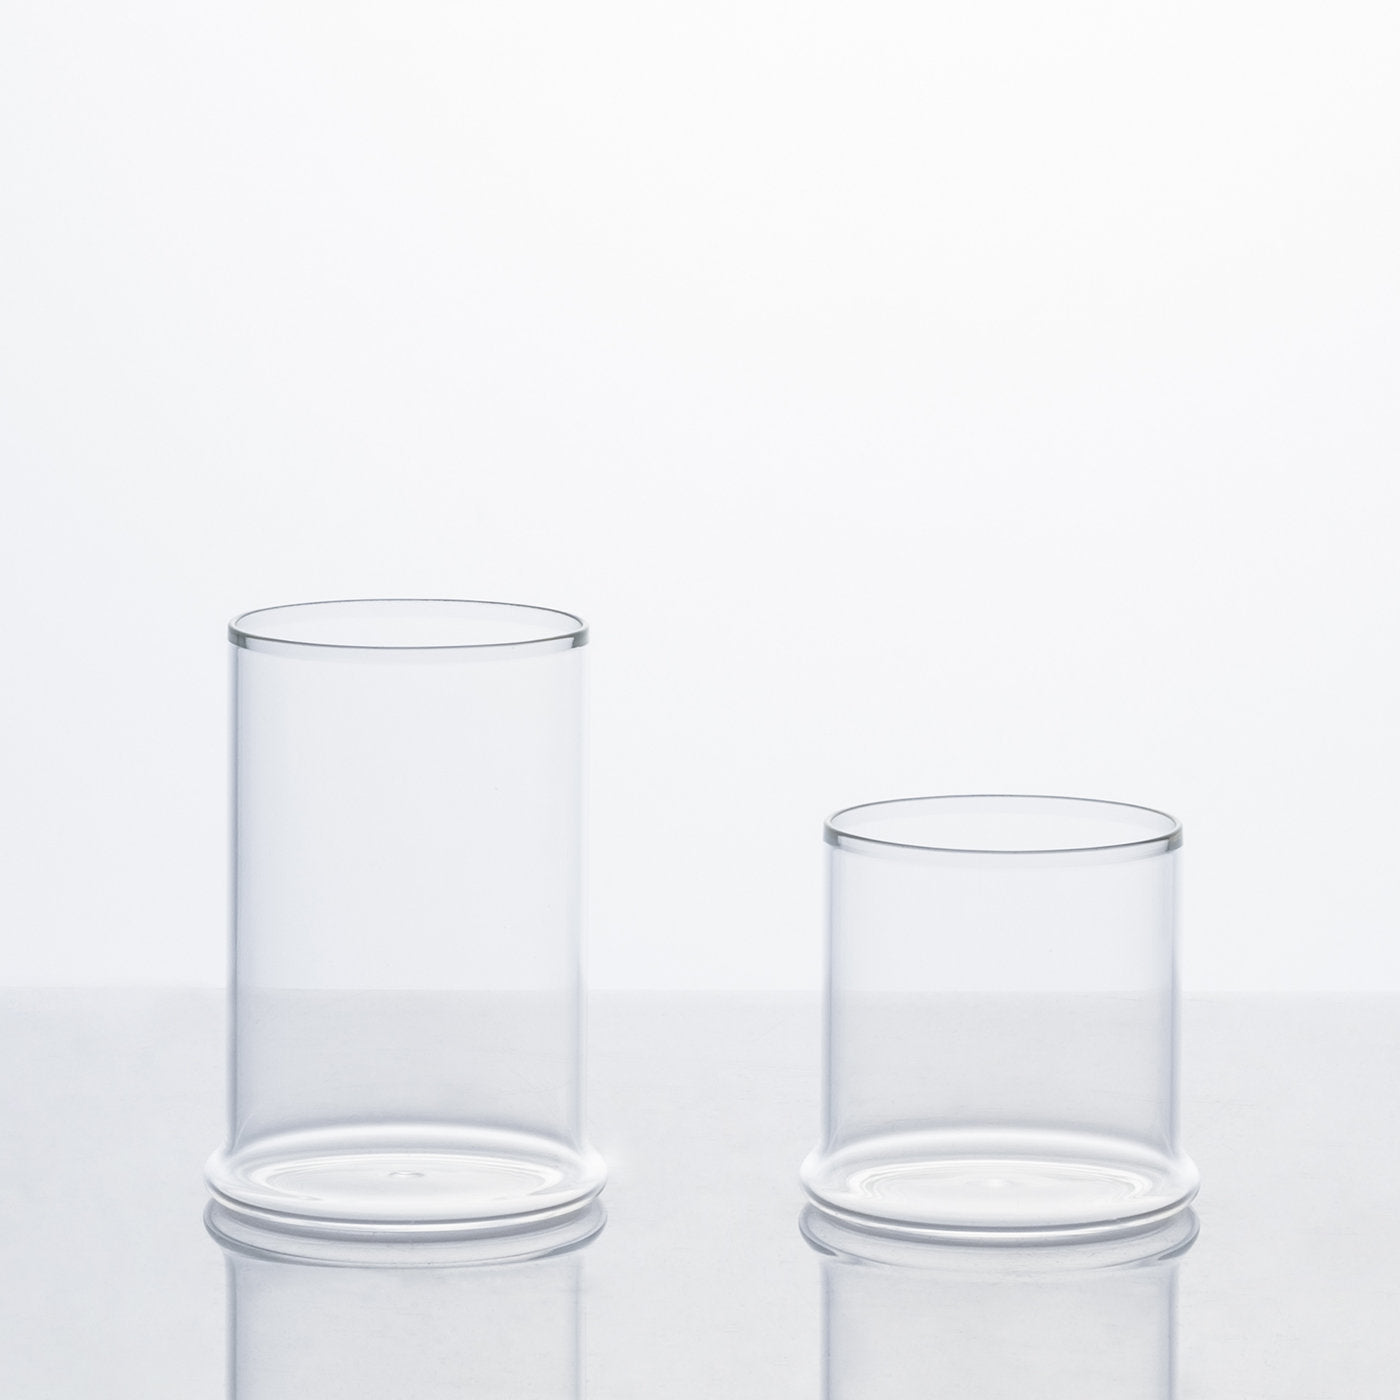 Take Set of 2 Water Glasses - Alternative view 1